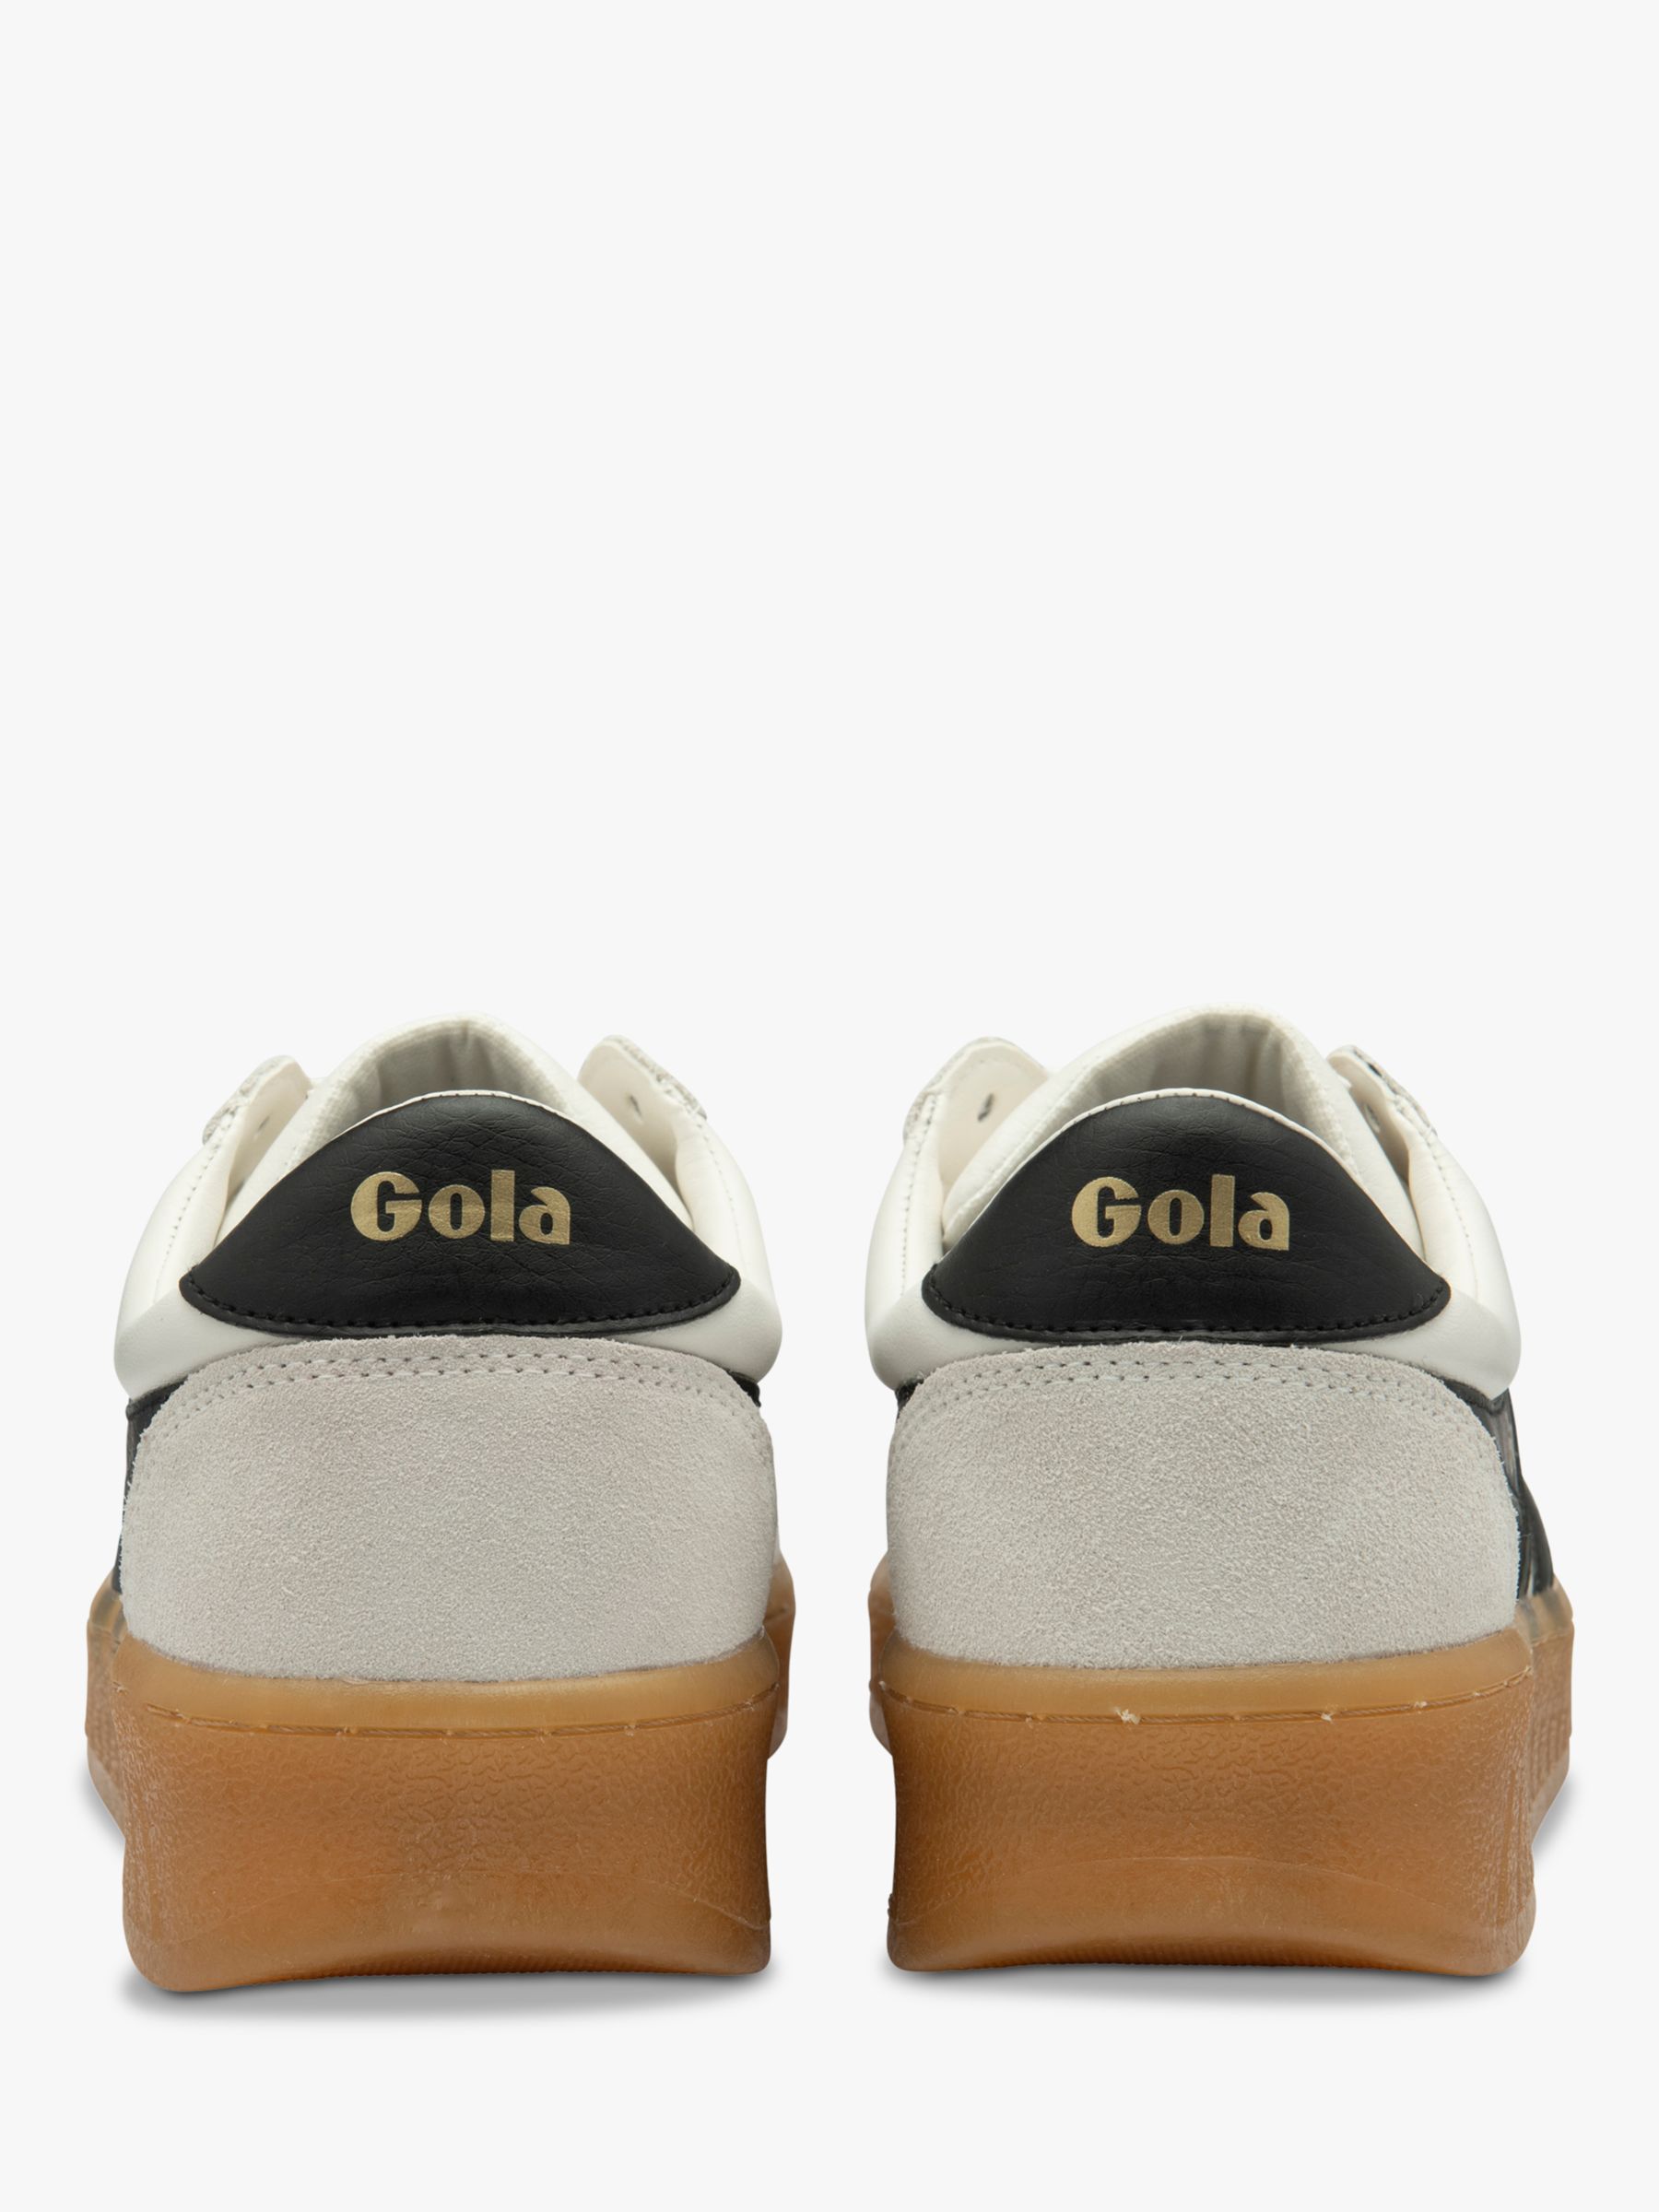 Gola Classics Grandslam Leather Trainers, White/Black/Gum, 6